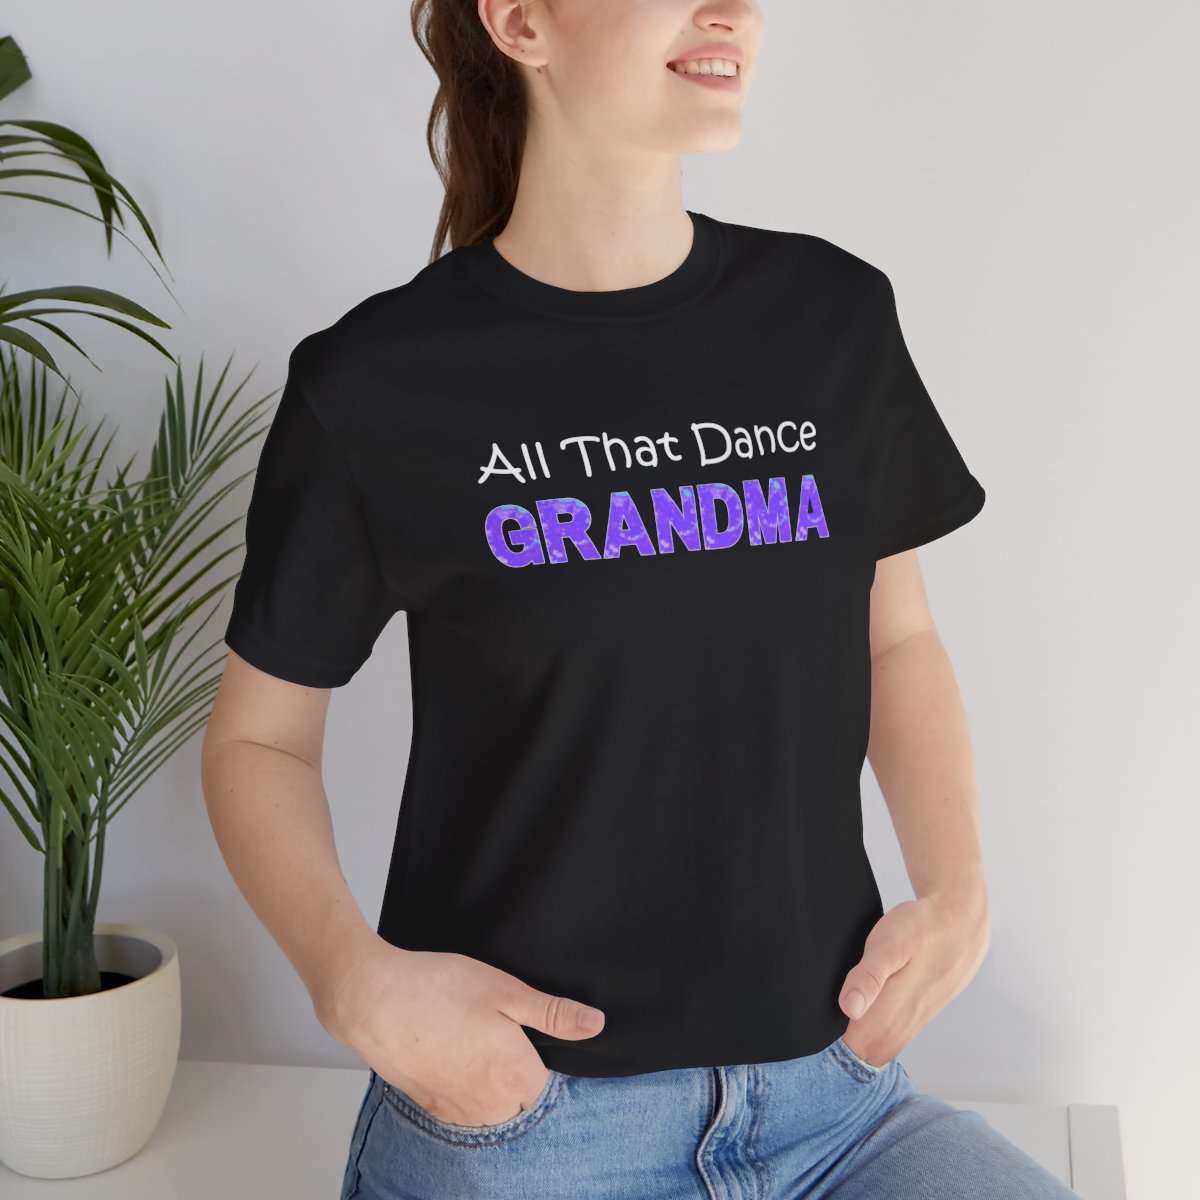 All That Dance Grandma Tshirt product thumbnail image